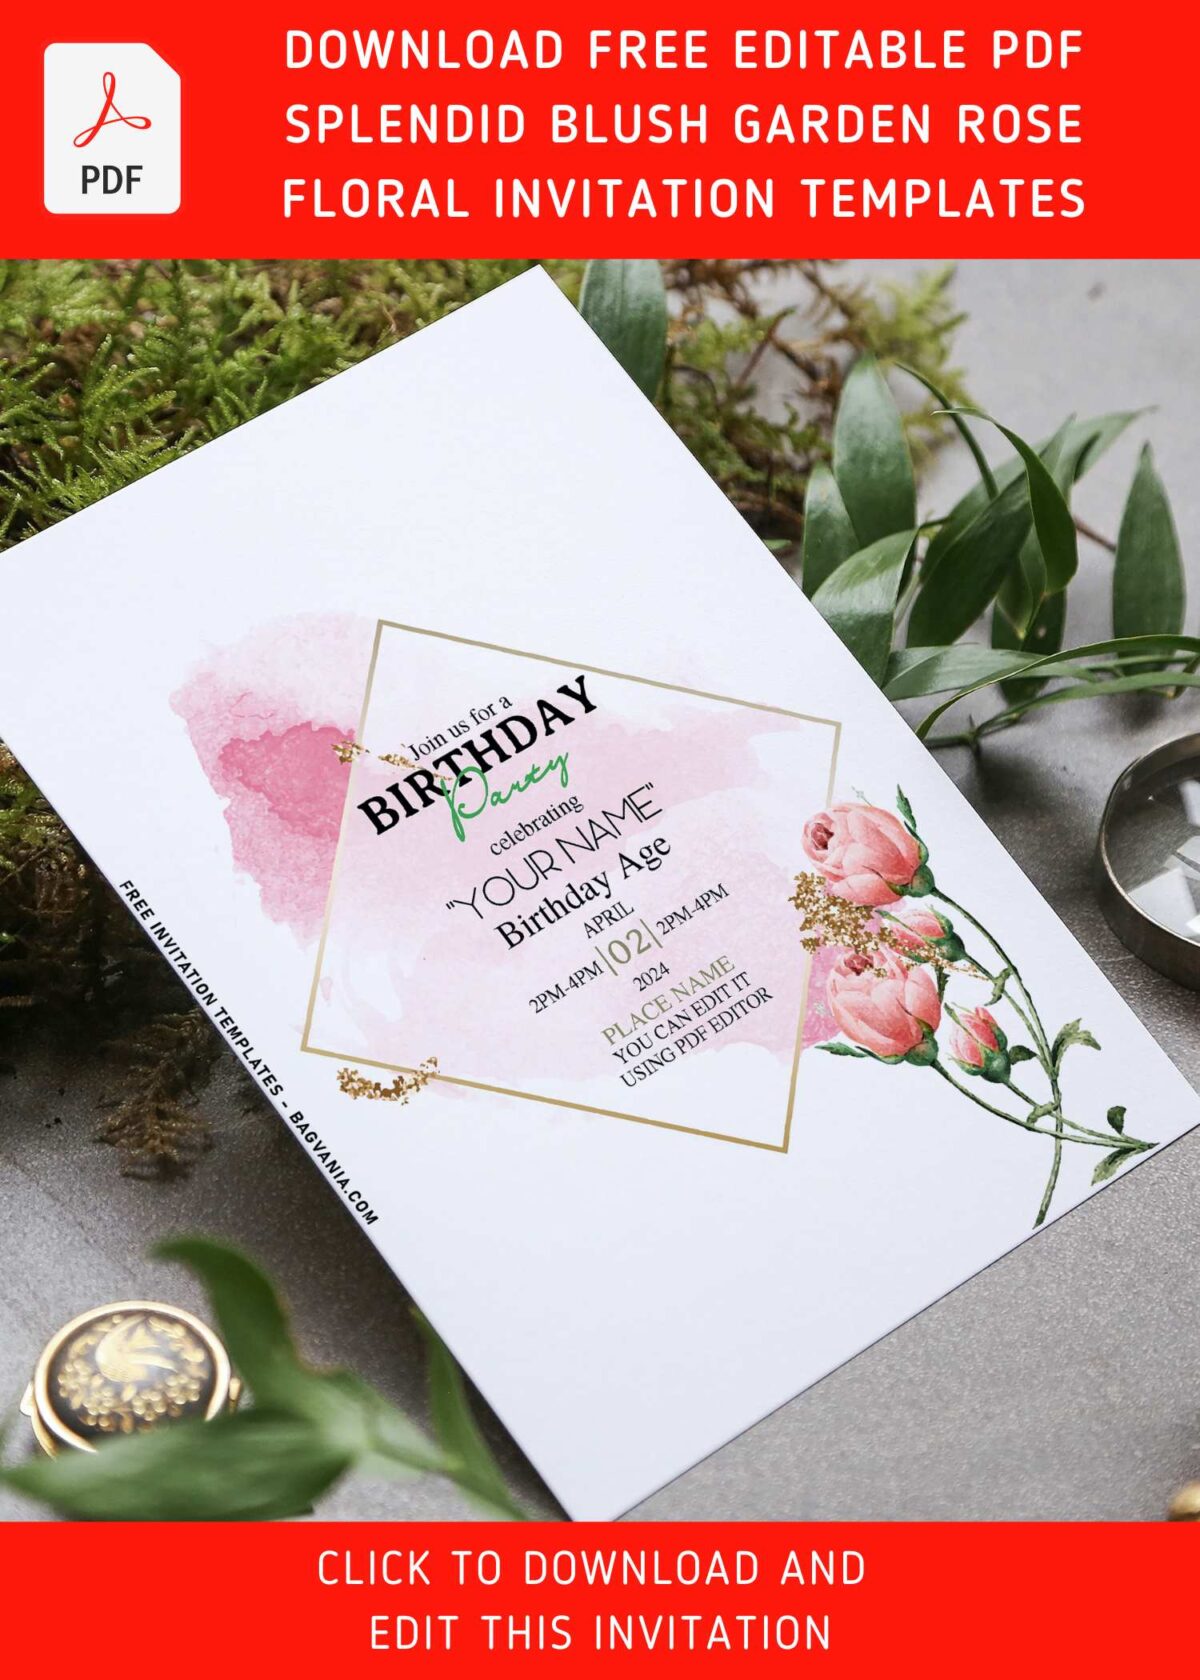 (Free Editable PDF) Splendid Blush Rose Garden Birthday Party Invitation Templates with editable text